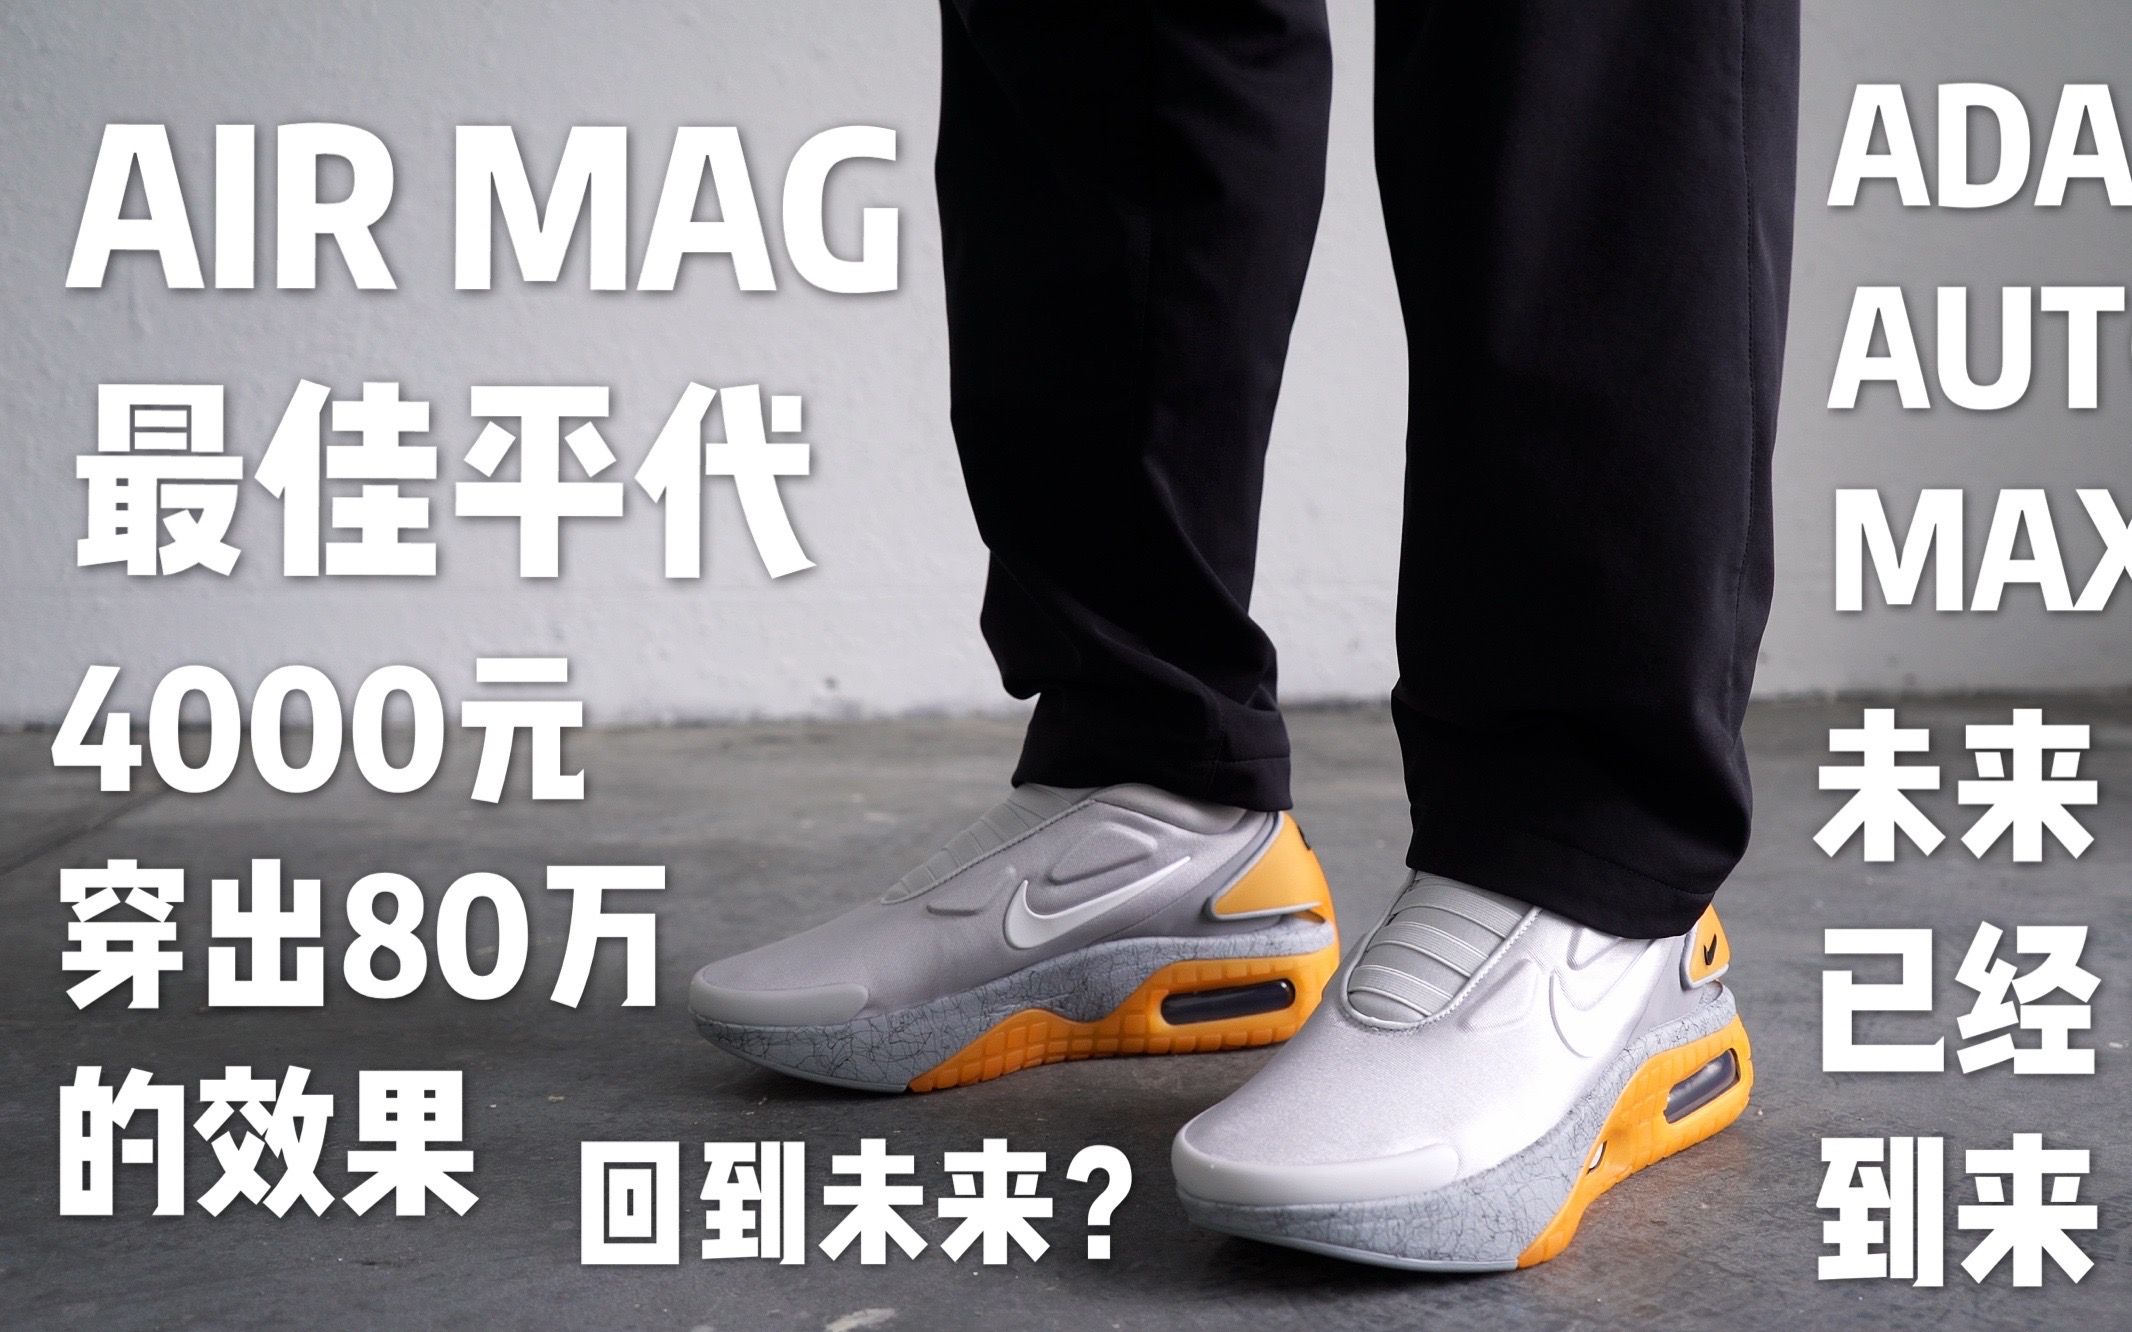 Nike Air Mag - 回到未来 3D模型 $31 - .blend .obj .fbx - Free3D